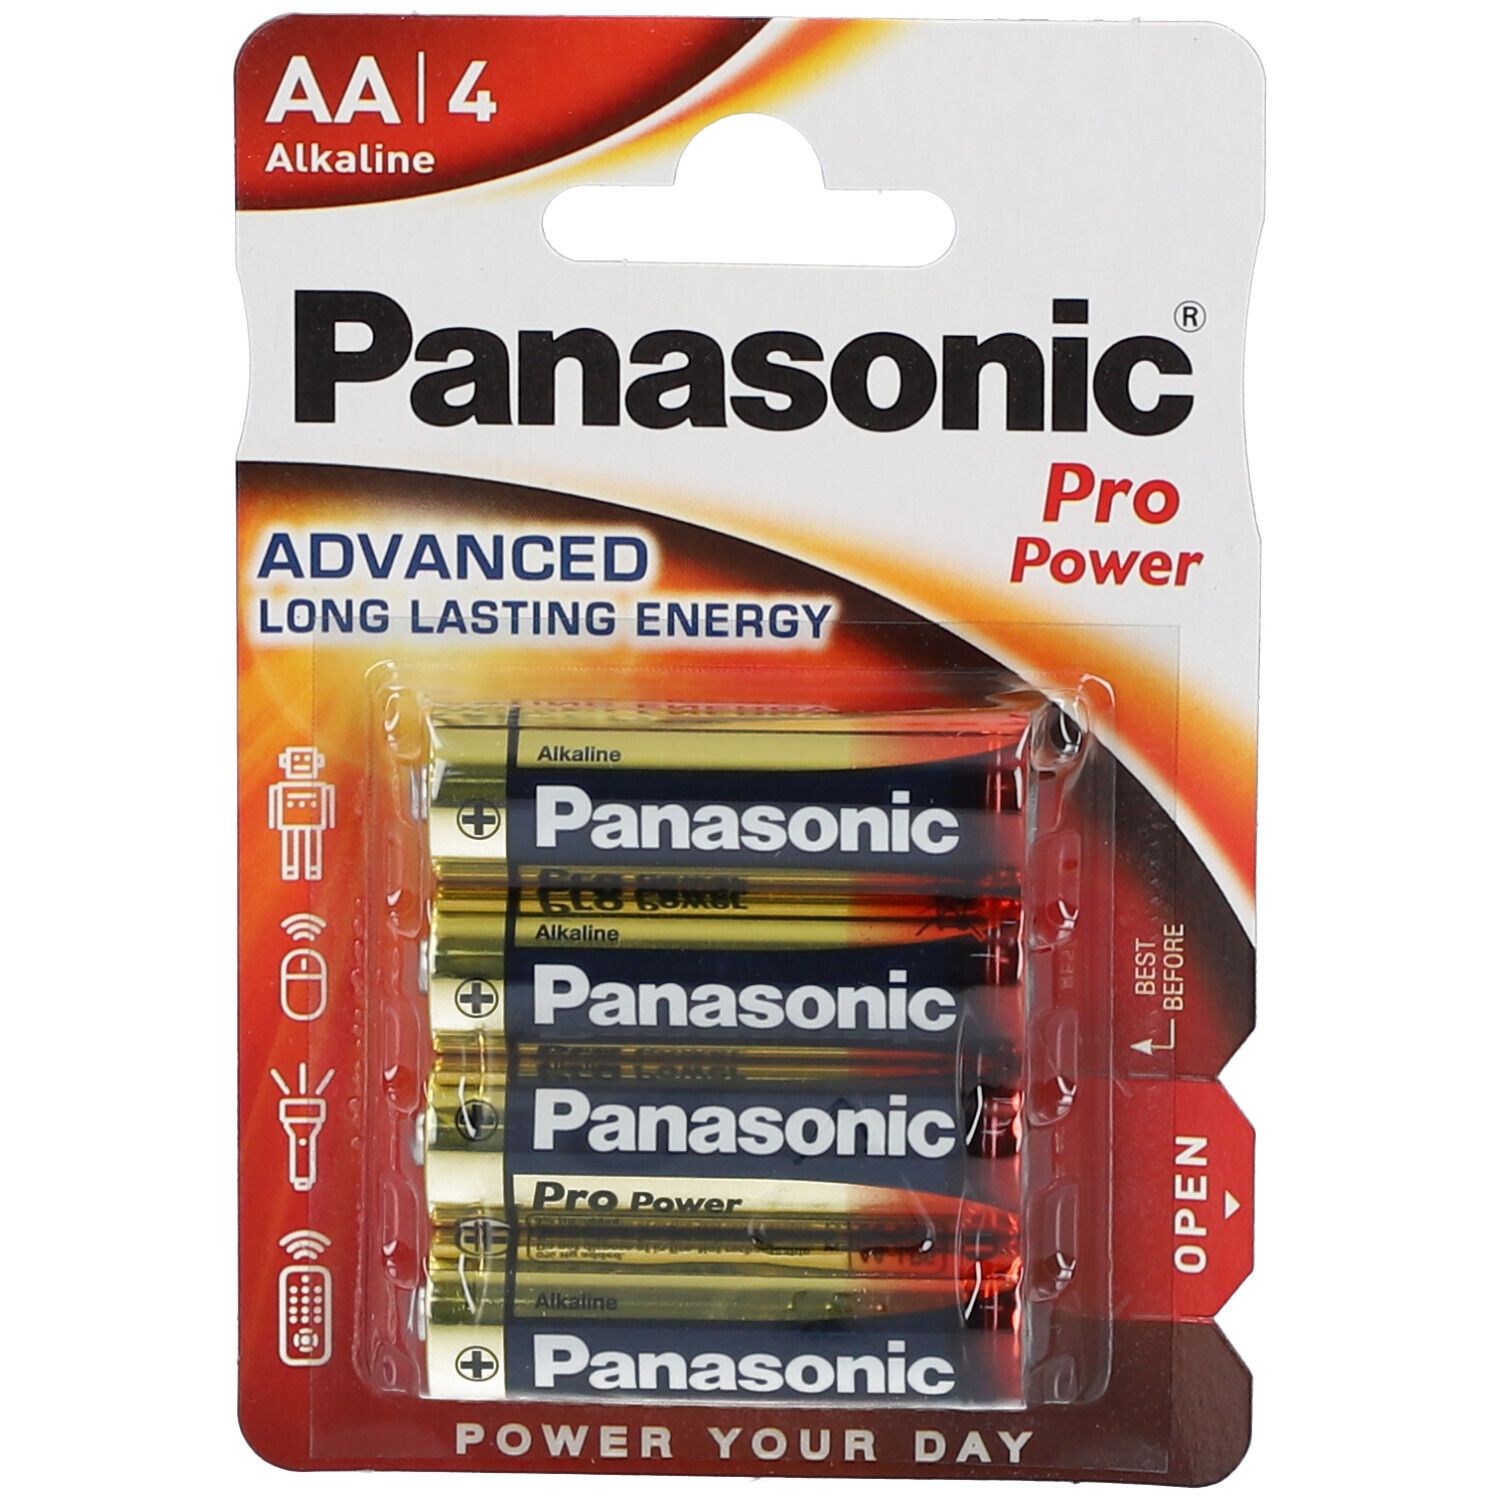 Panasonic Batteries Pro Power AA4